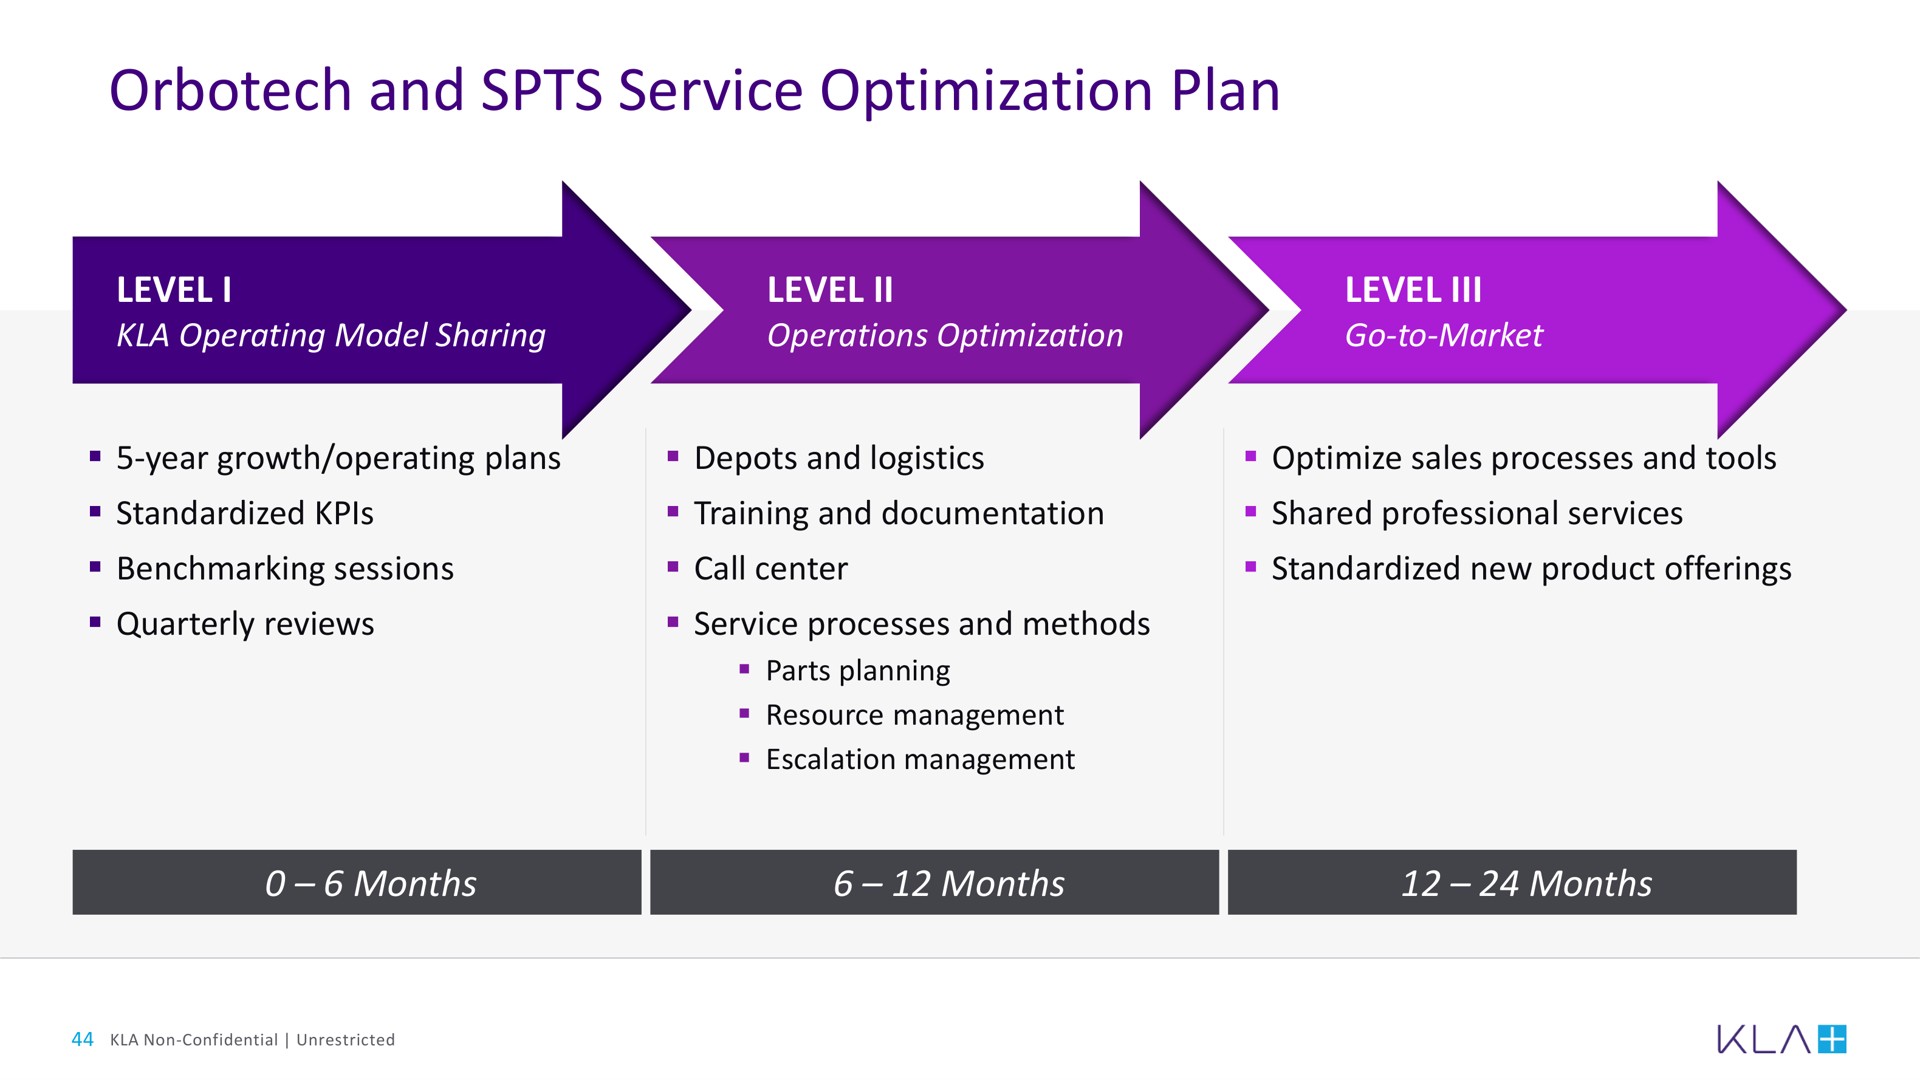 and service optimization plan | KLA